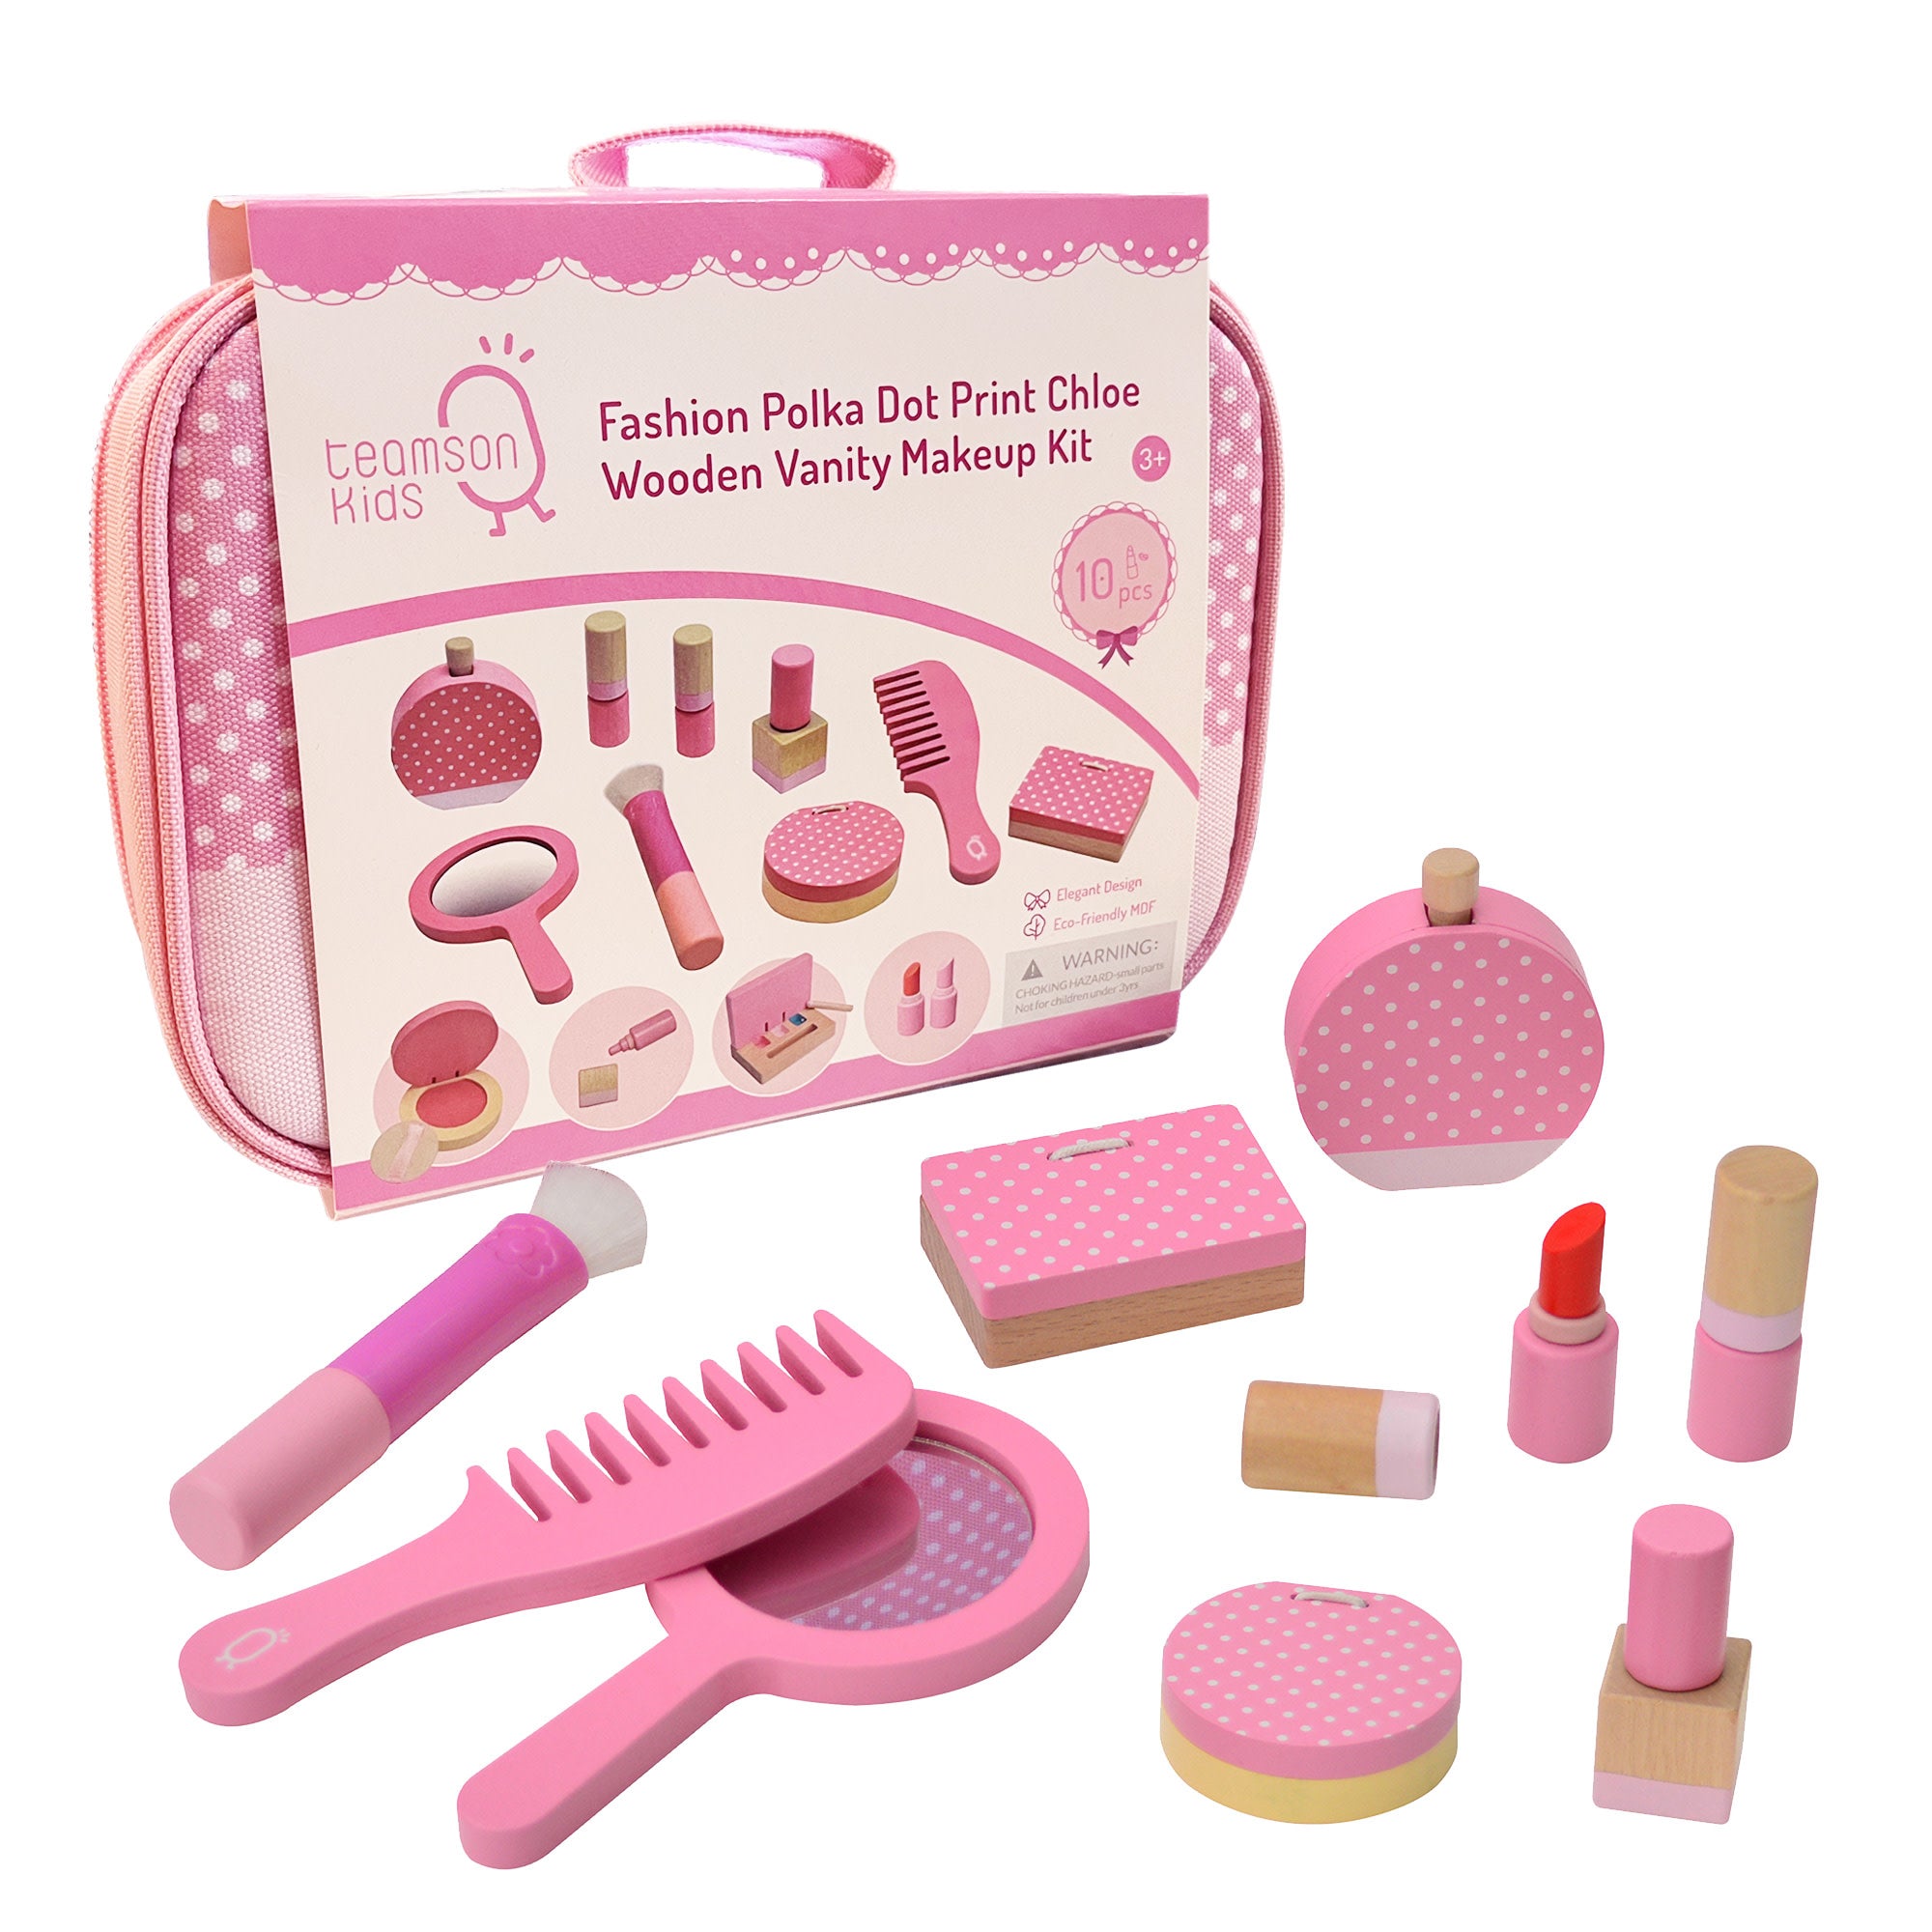 Teamson Kids Fashion Polka Dot Print Chloe Wooden Vanity Accessories Makeup Kit, Pink